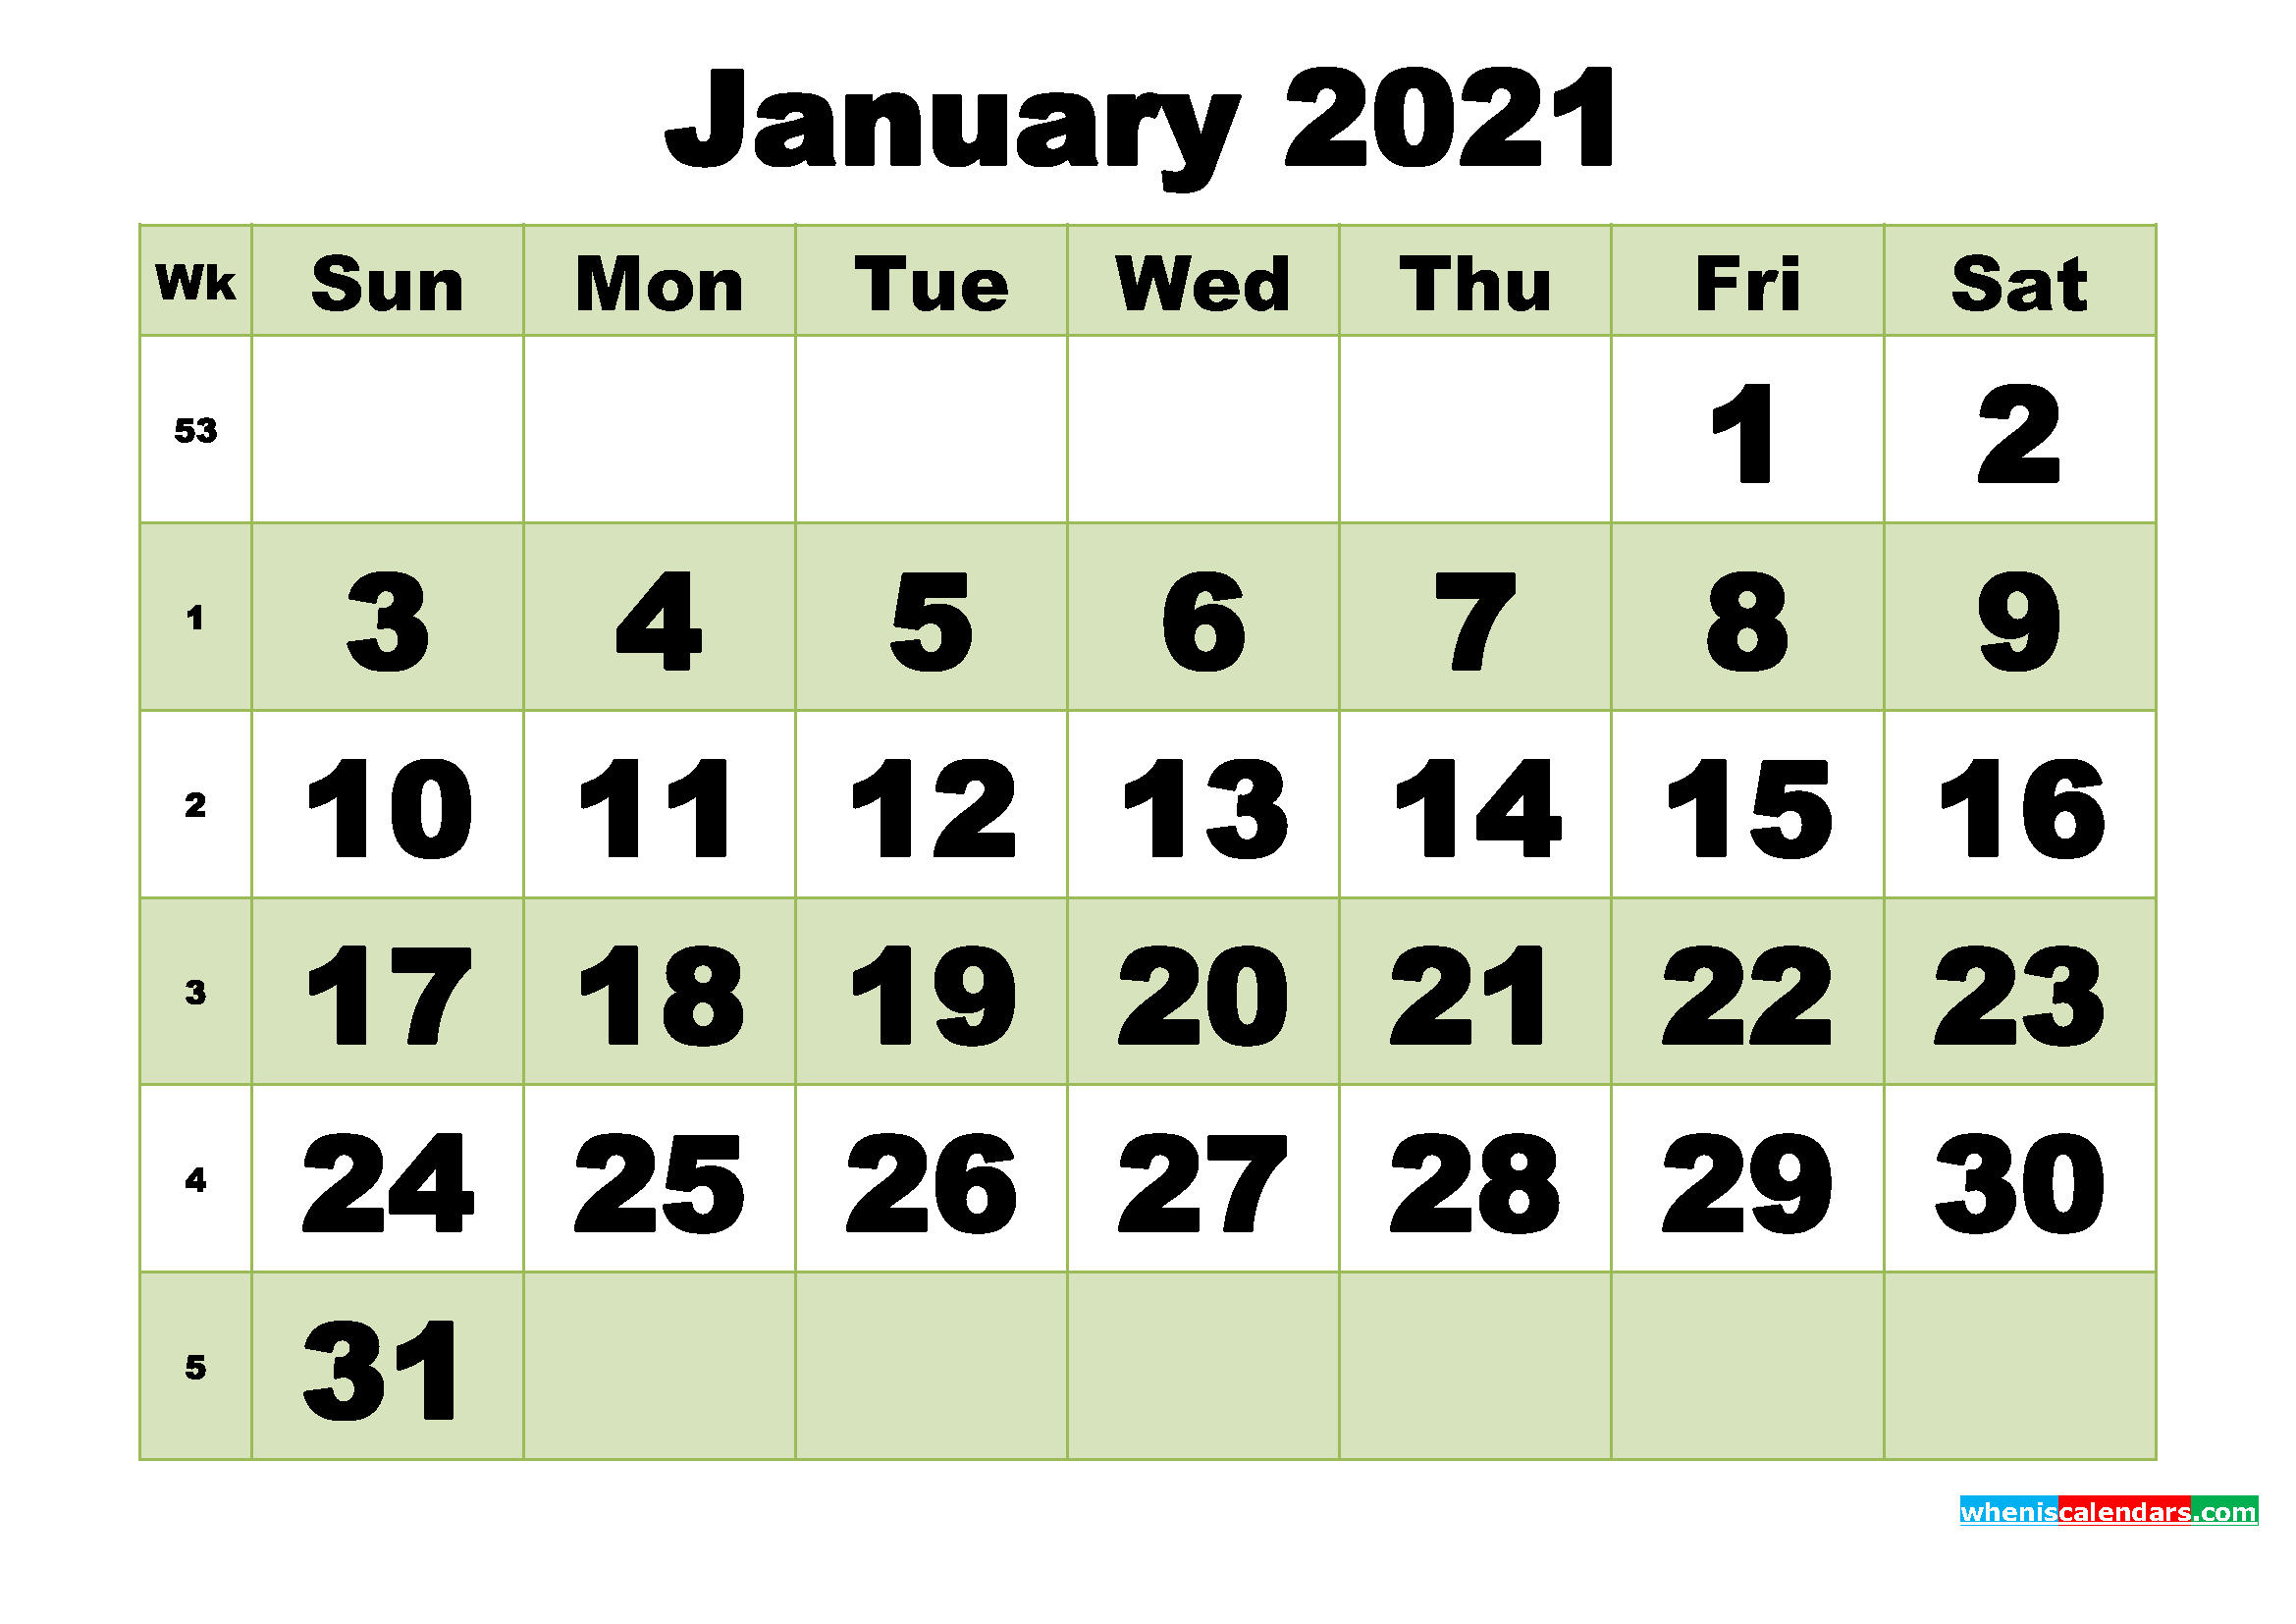 January 2021 Printable Calendar Template